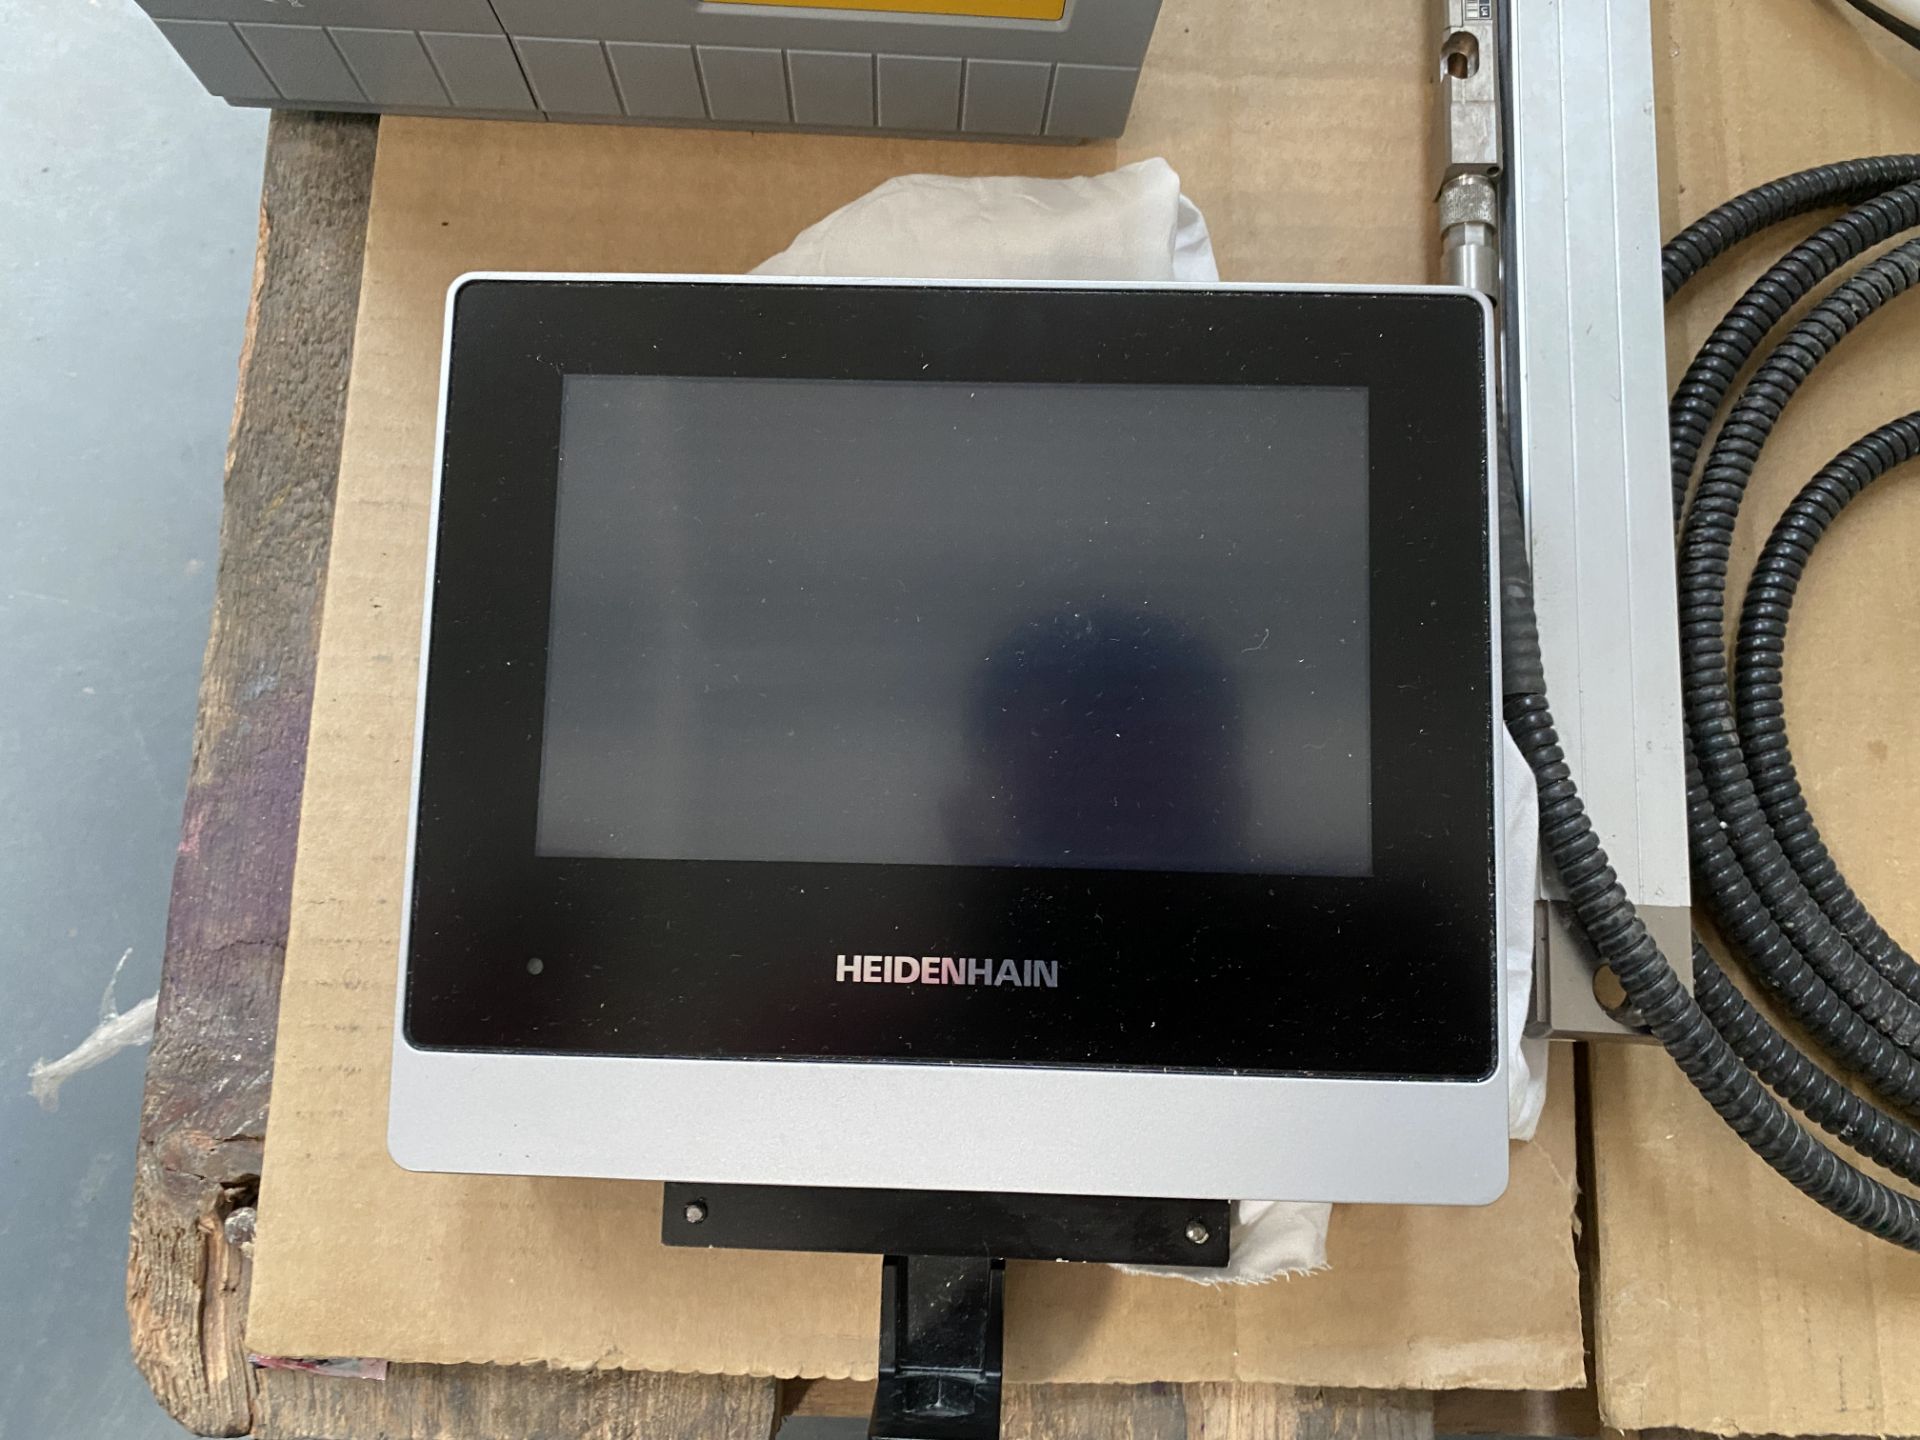 DRO Machine Heiddenhain Monitor - Model 10G-430090BF with AC10 Series Control - Image 9 of 15